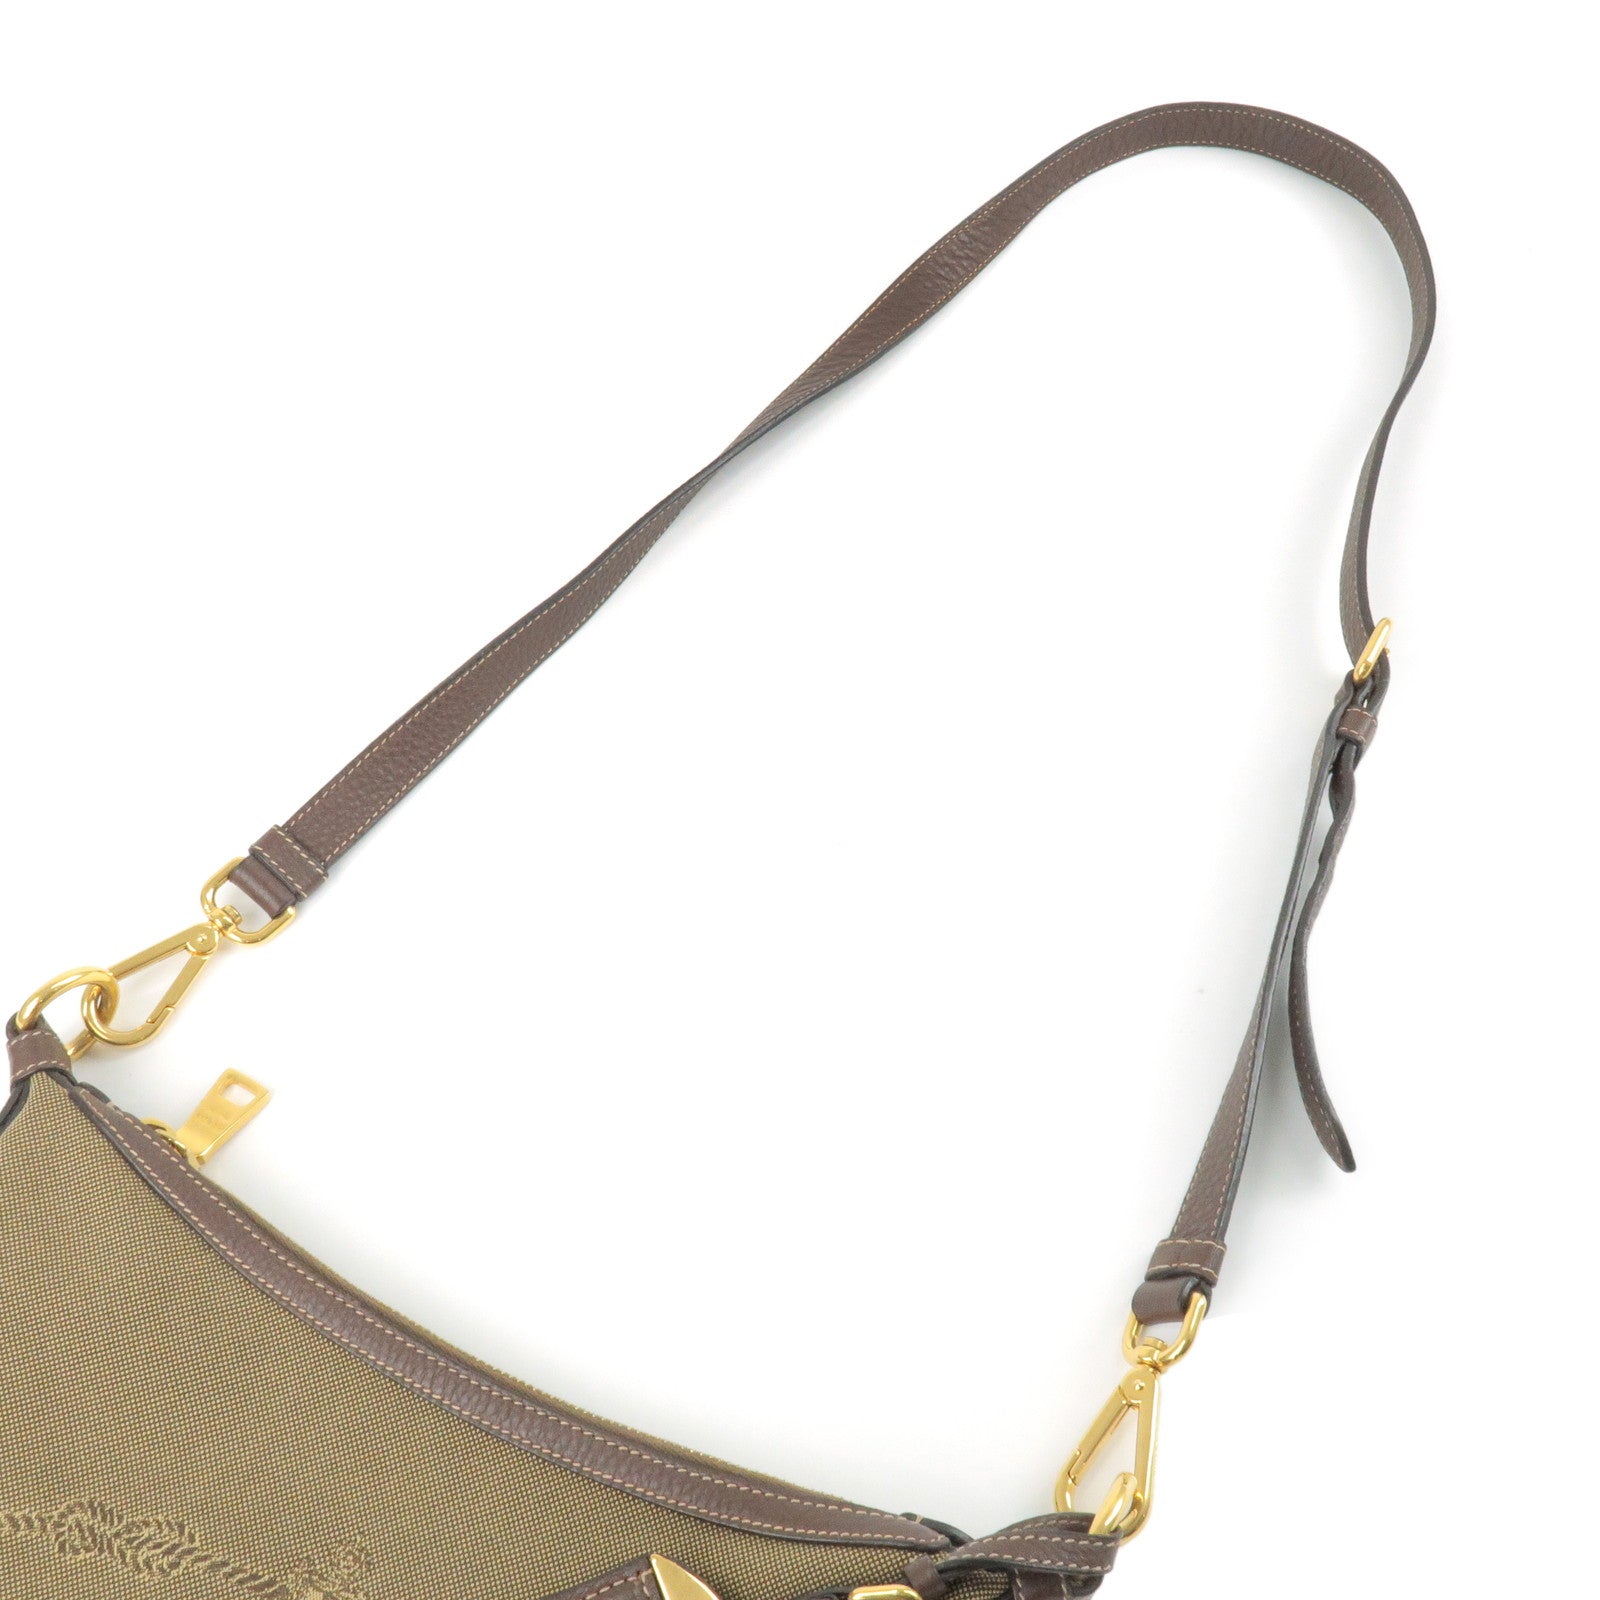 Prada shoulder bag Crossbody Bag logo Canvas jacquard beige brown